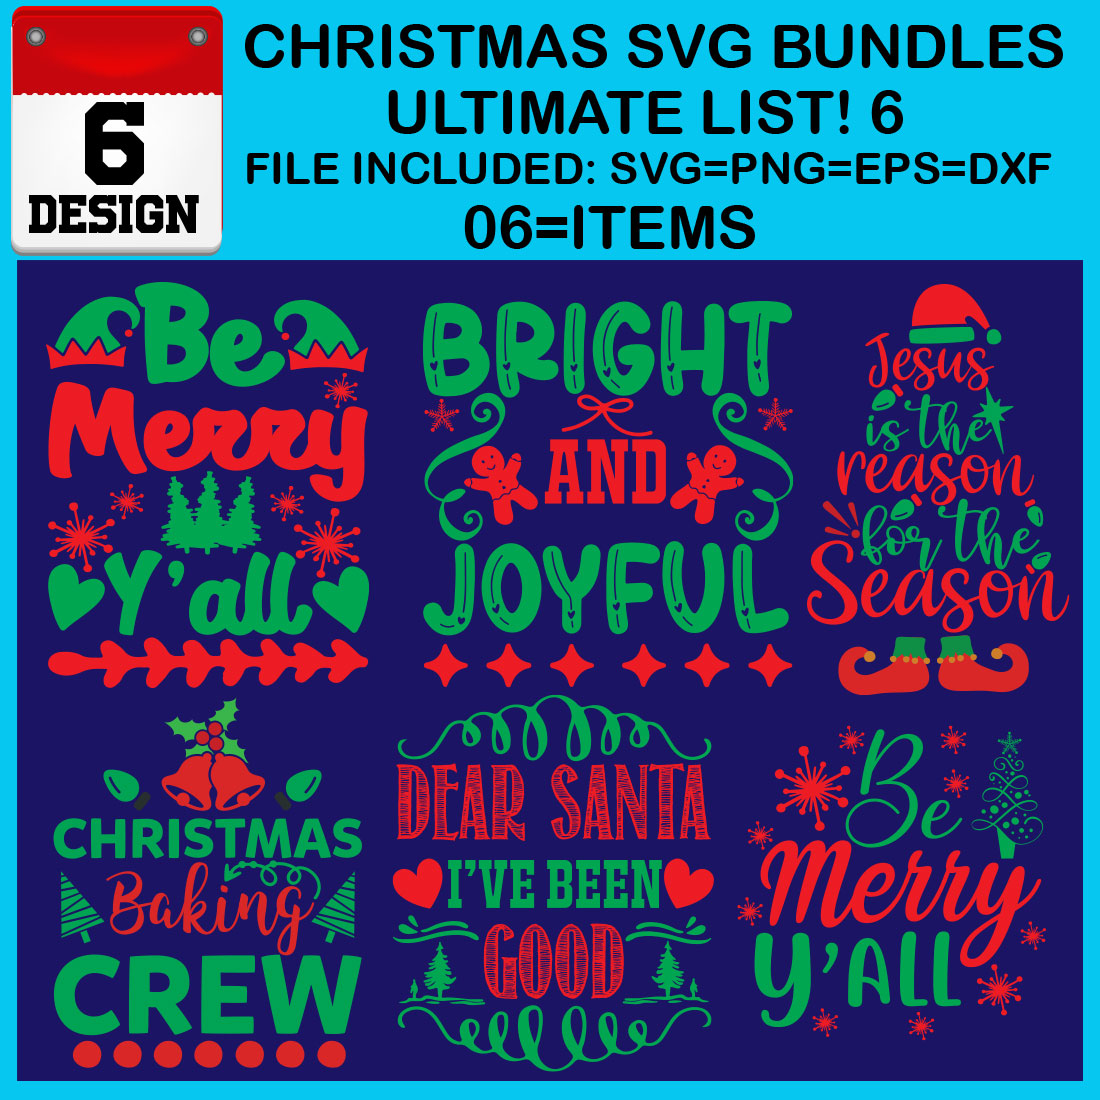 Ultimate List! 6 Christmas SVG Free Bundles cover image.